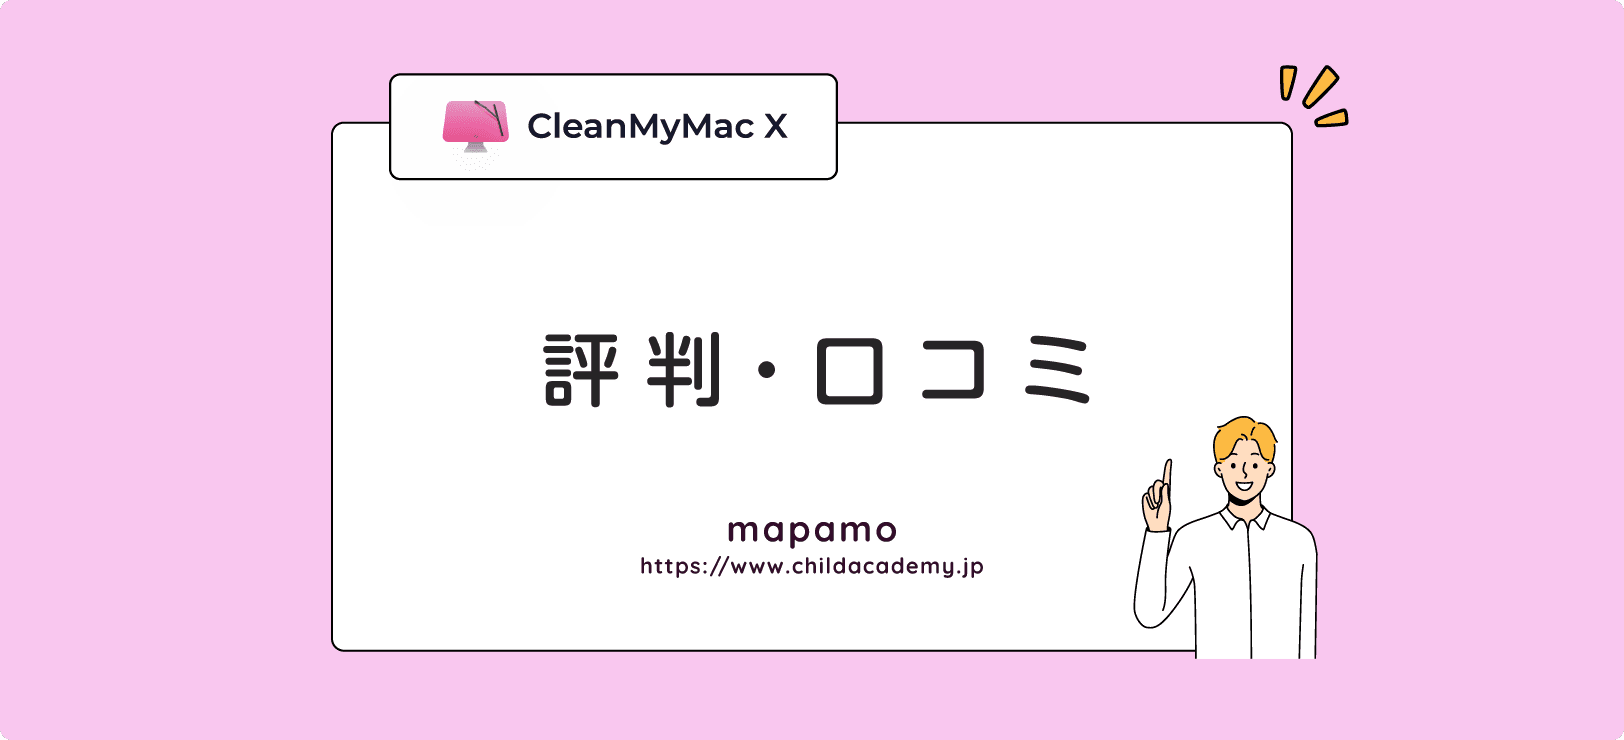 CleanMyMac X の口コミや評判